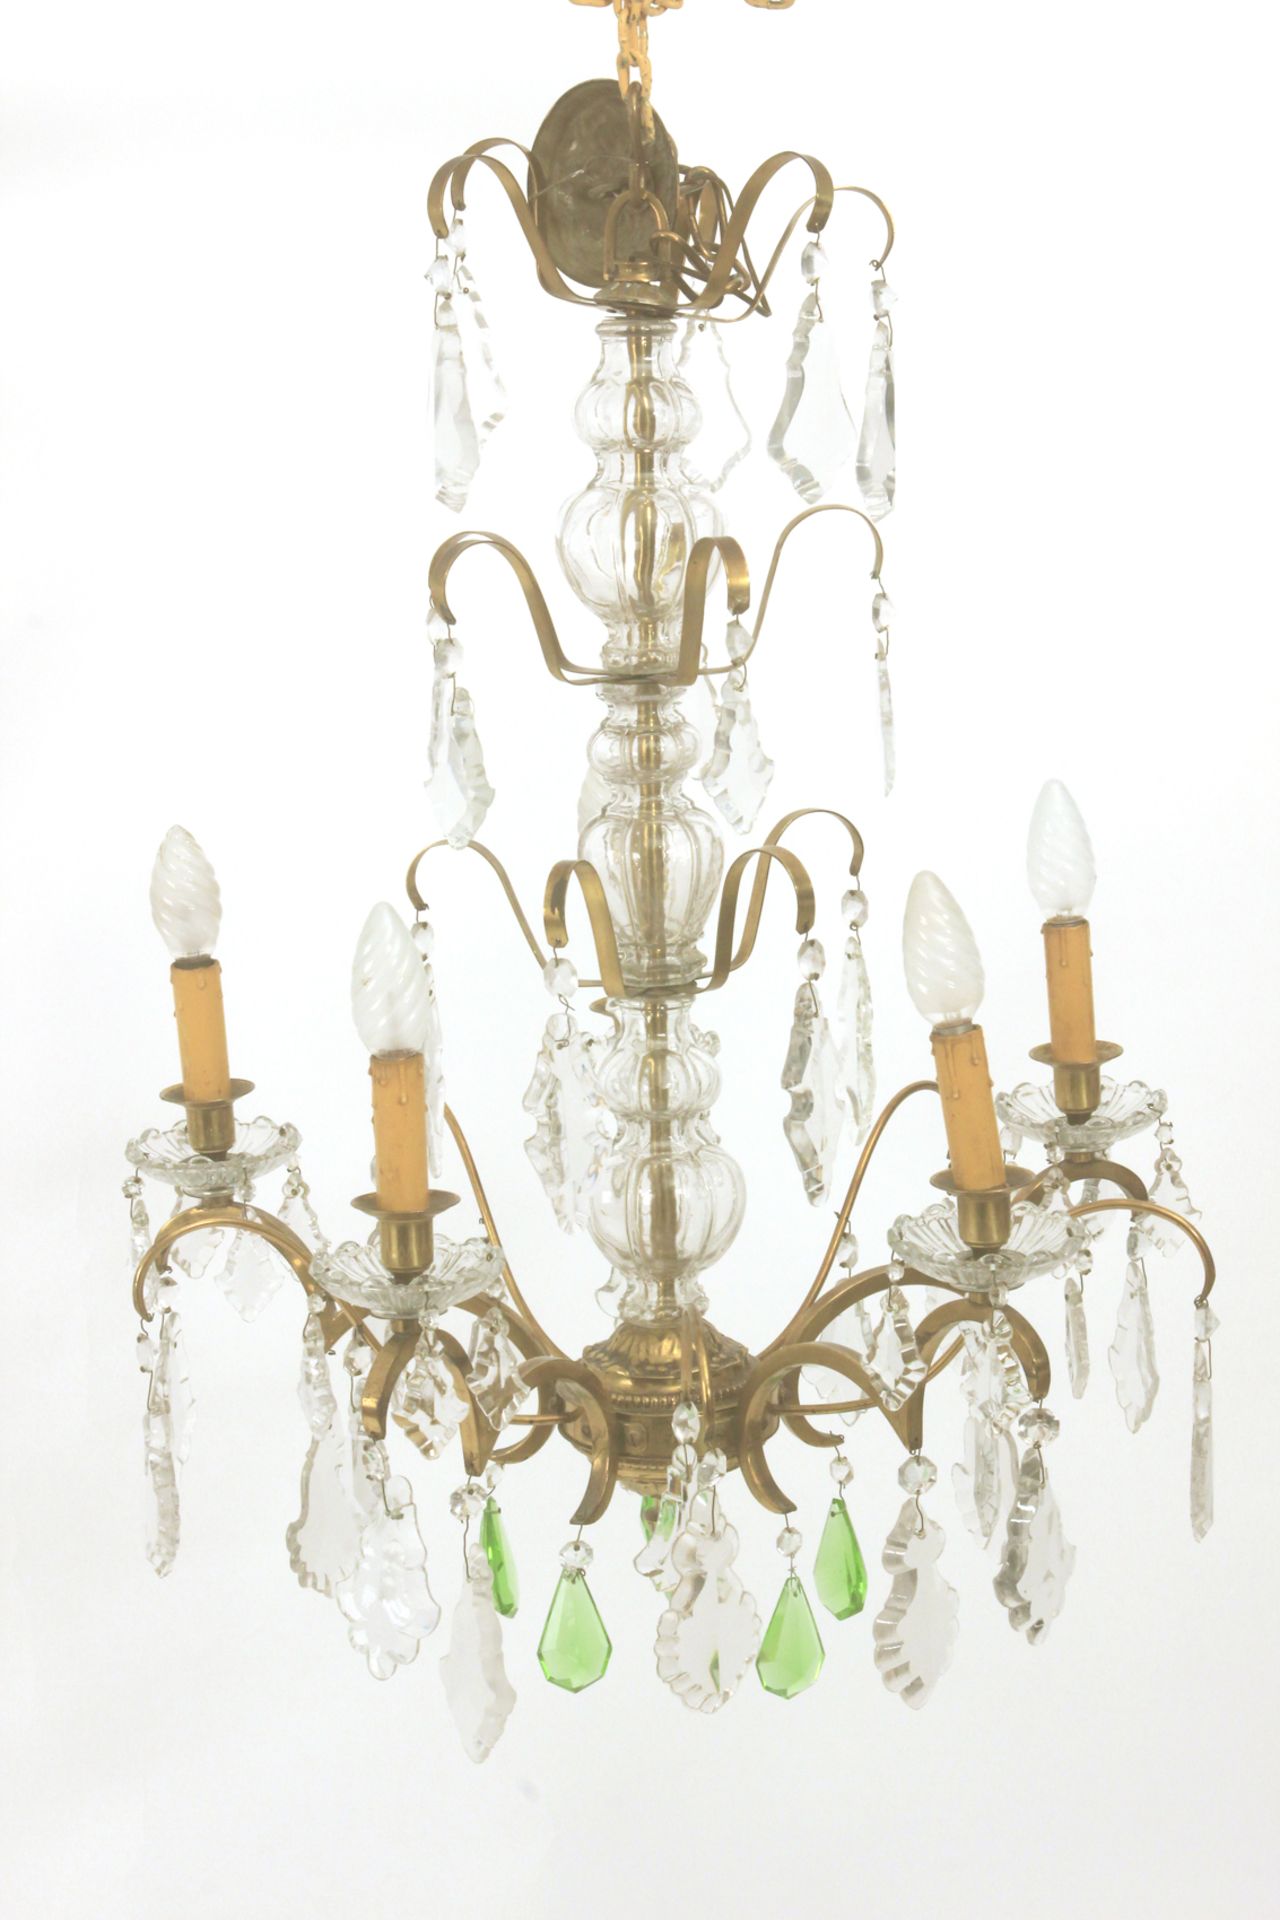 A 20th century five light chandelier